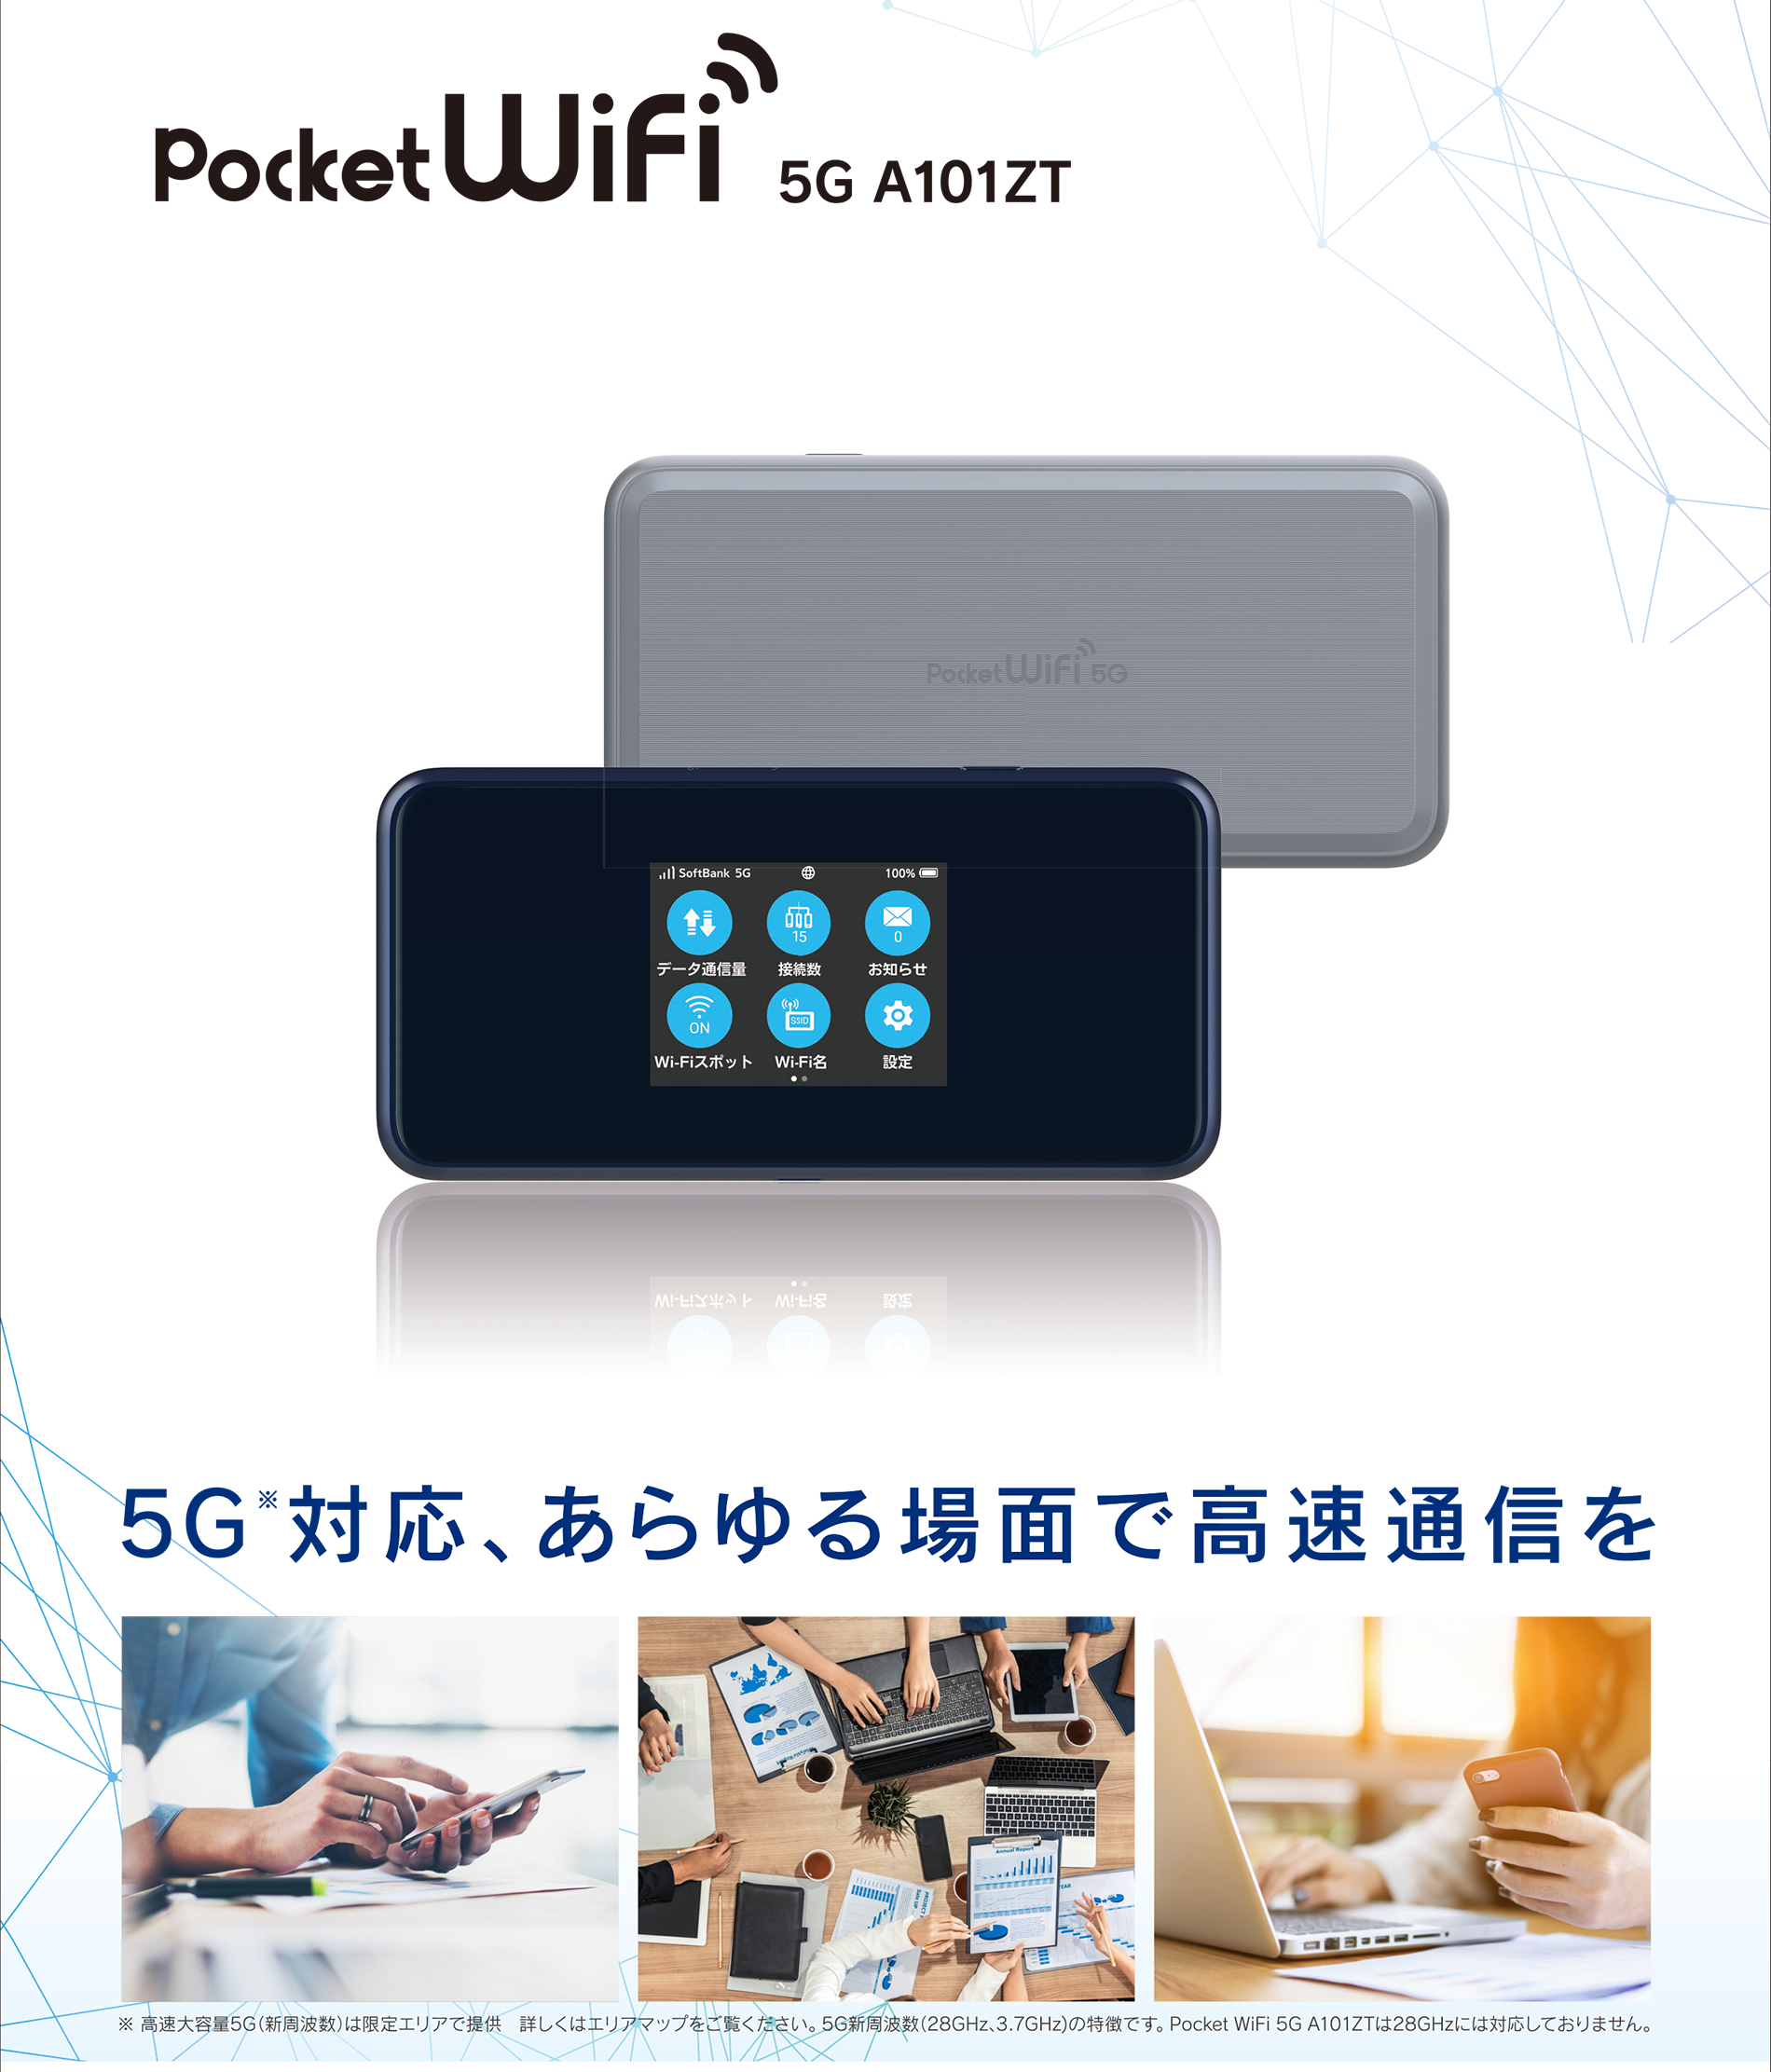 Pocket WiFi 5G A101ZT – ページ 1000 – ZTE Device Japan